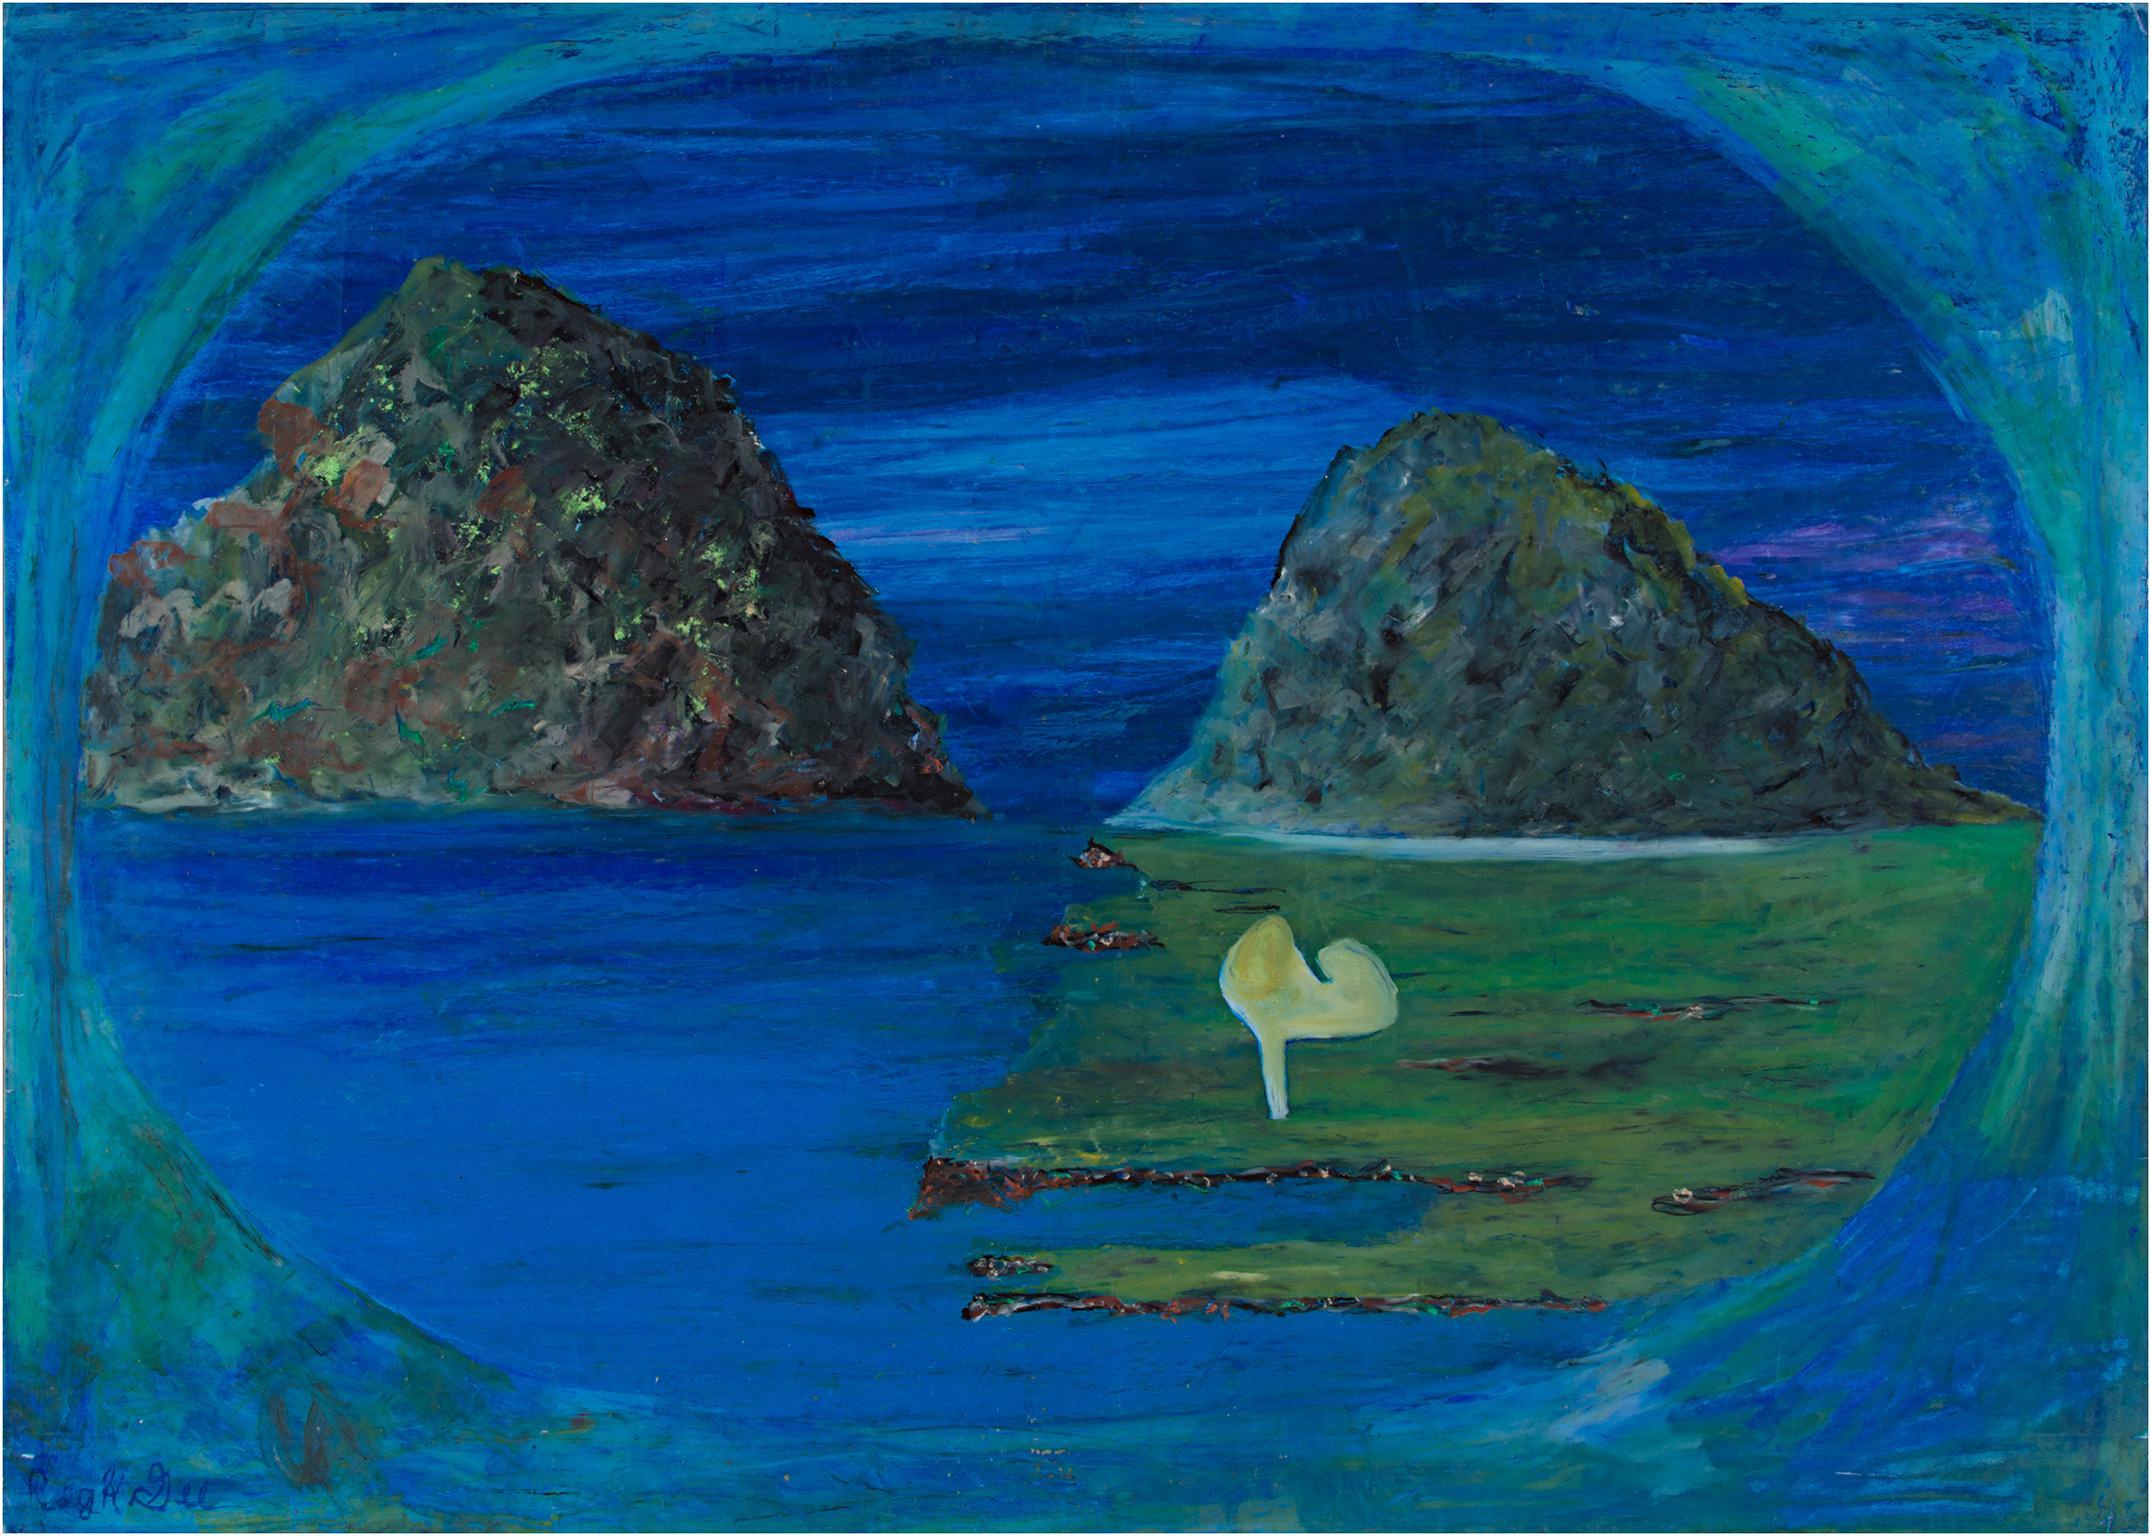 ""Looks Like a Nice Getaway Spot", Pastel d'huile de paysage bleu de Reginald K. Gee